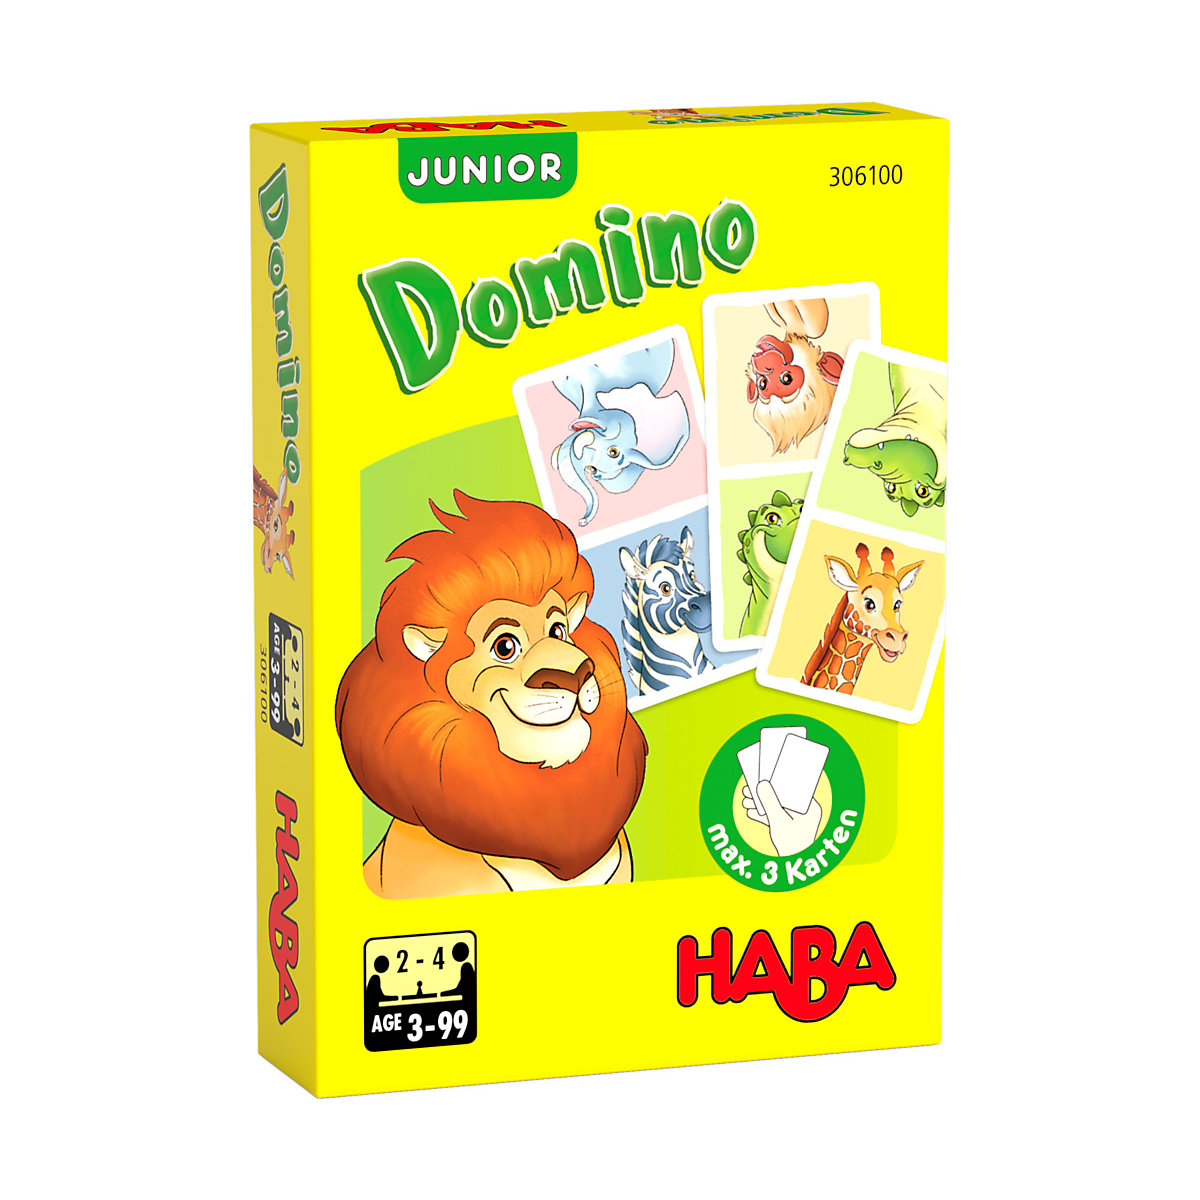 HABA 306100 Domino Junior